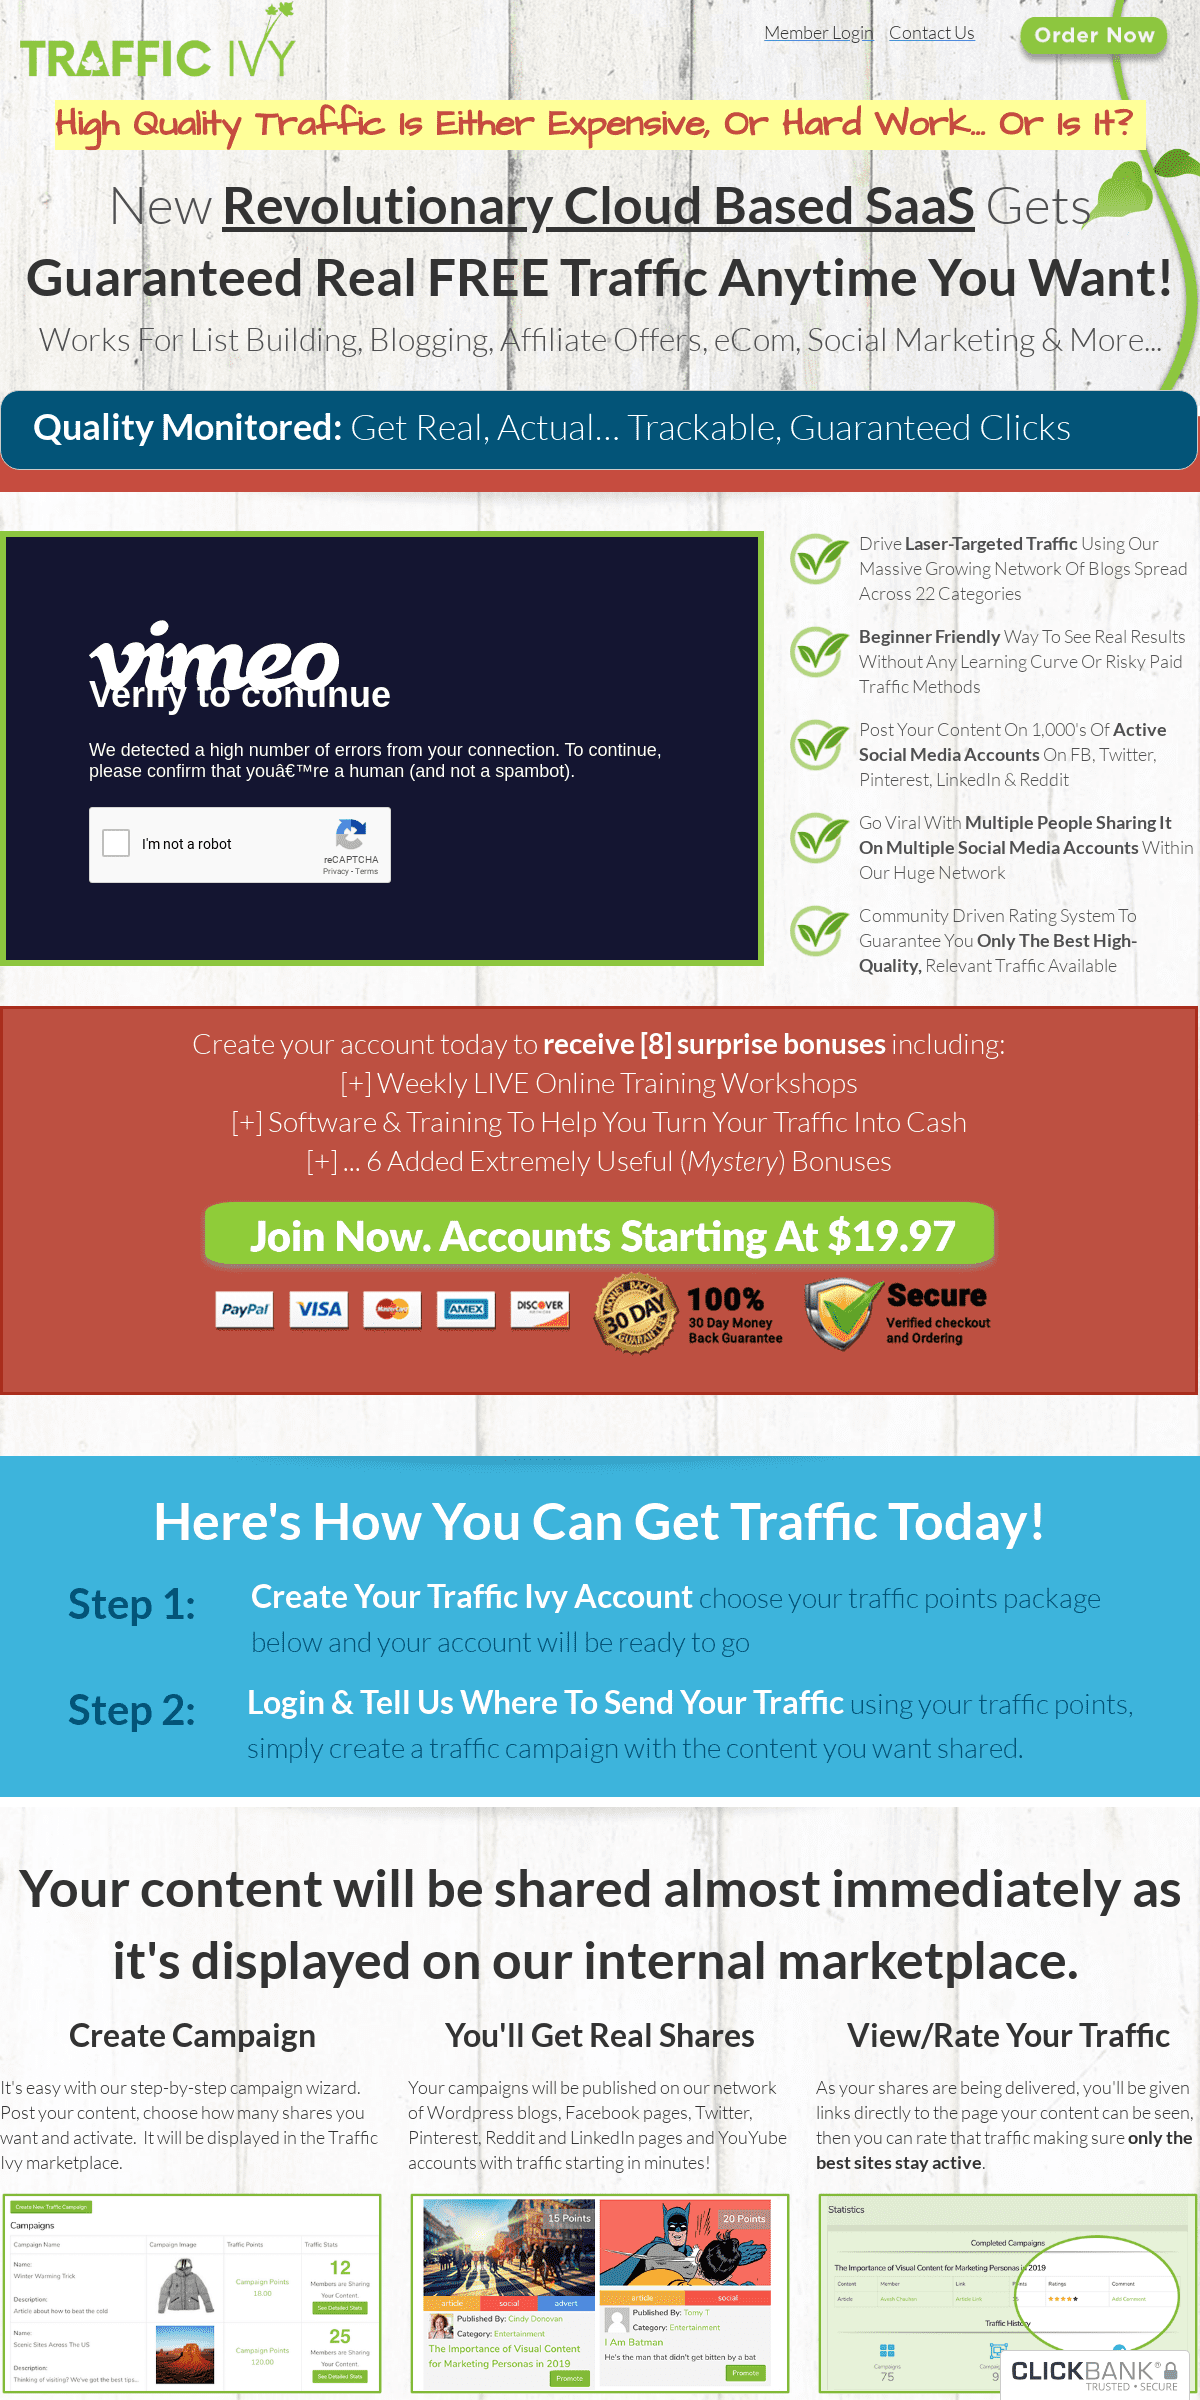 A complete backup of trafficivy.com